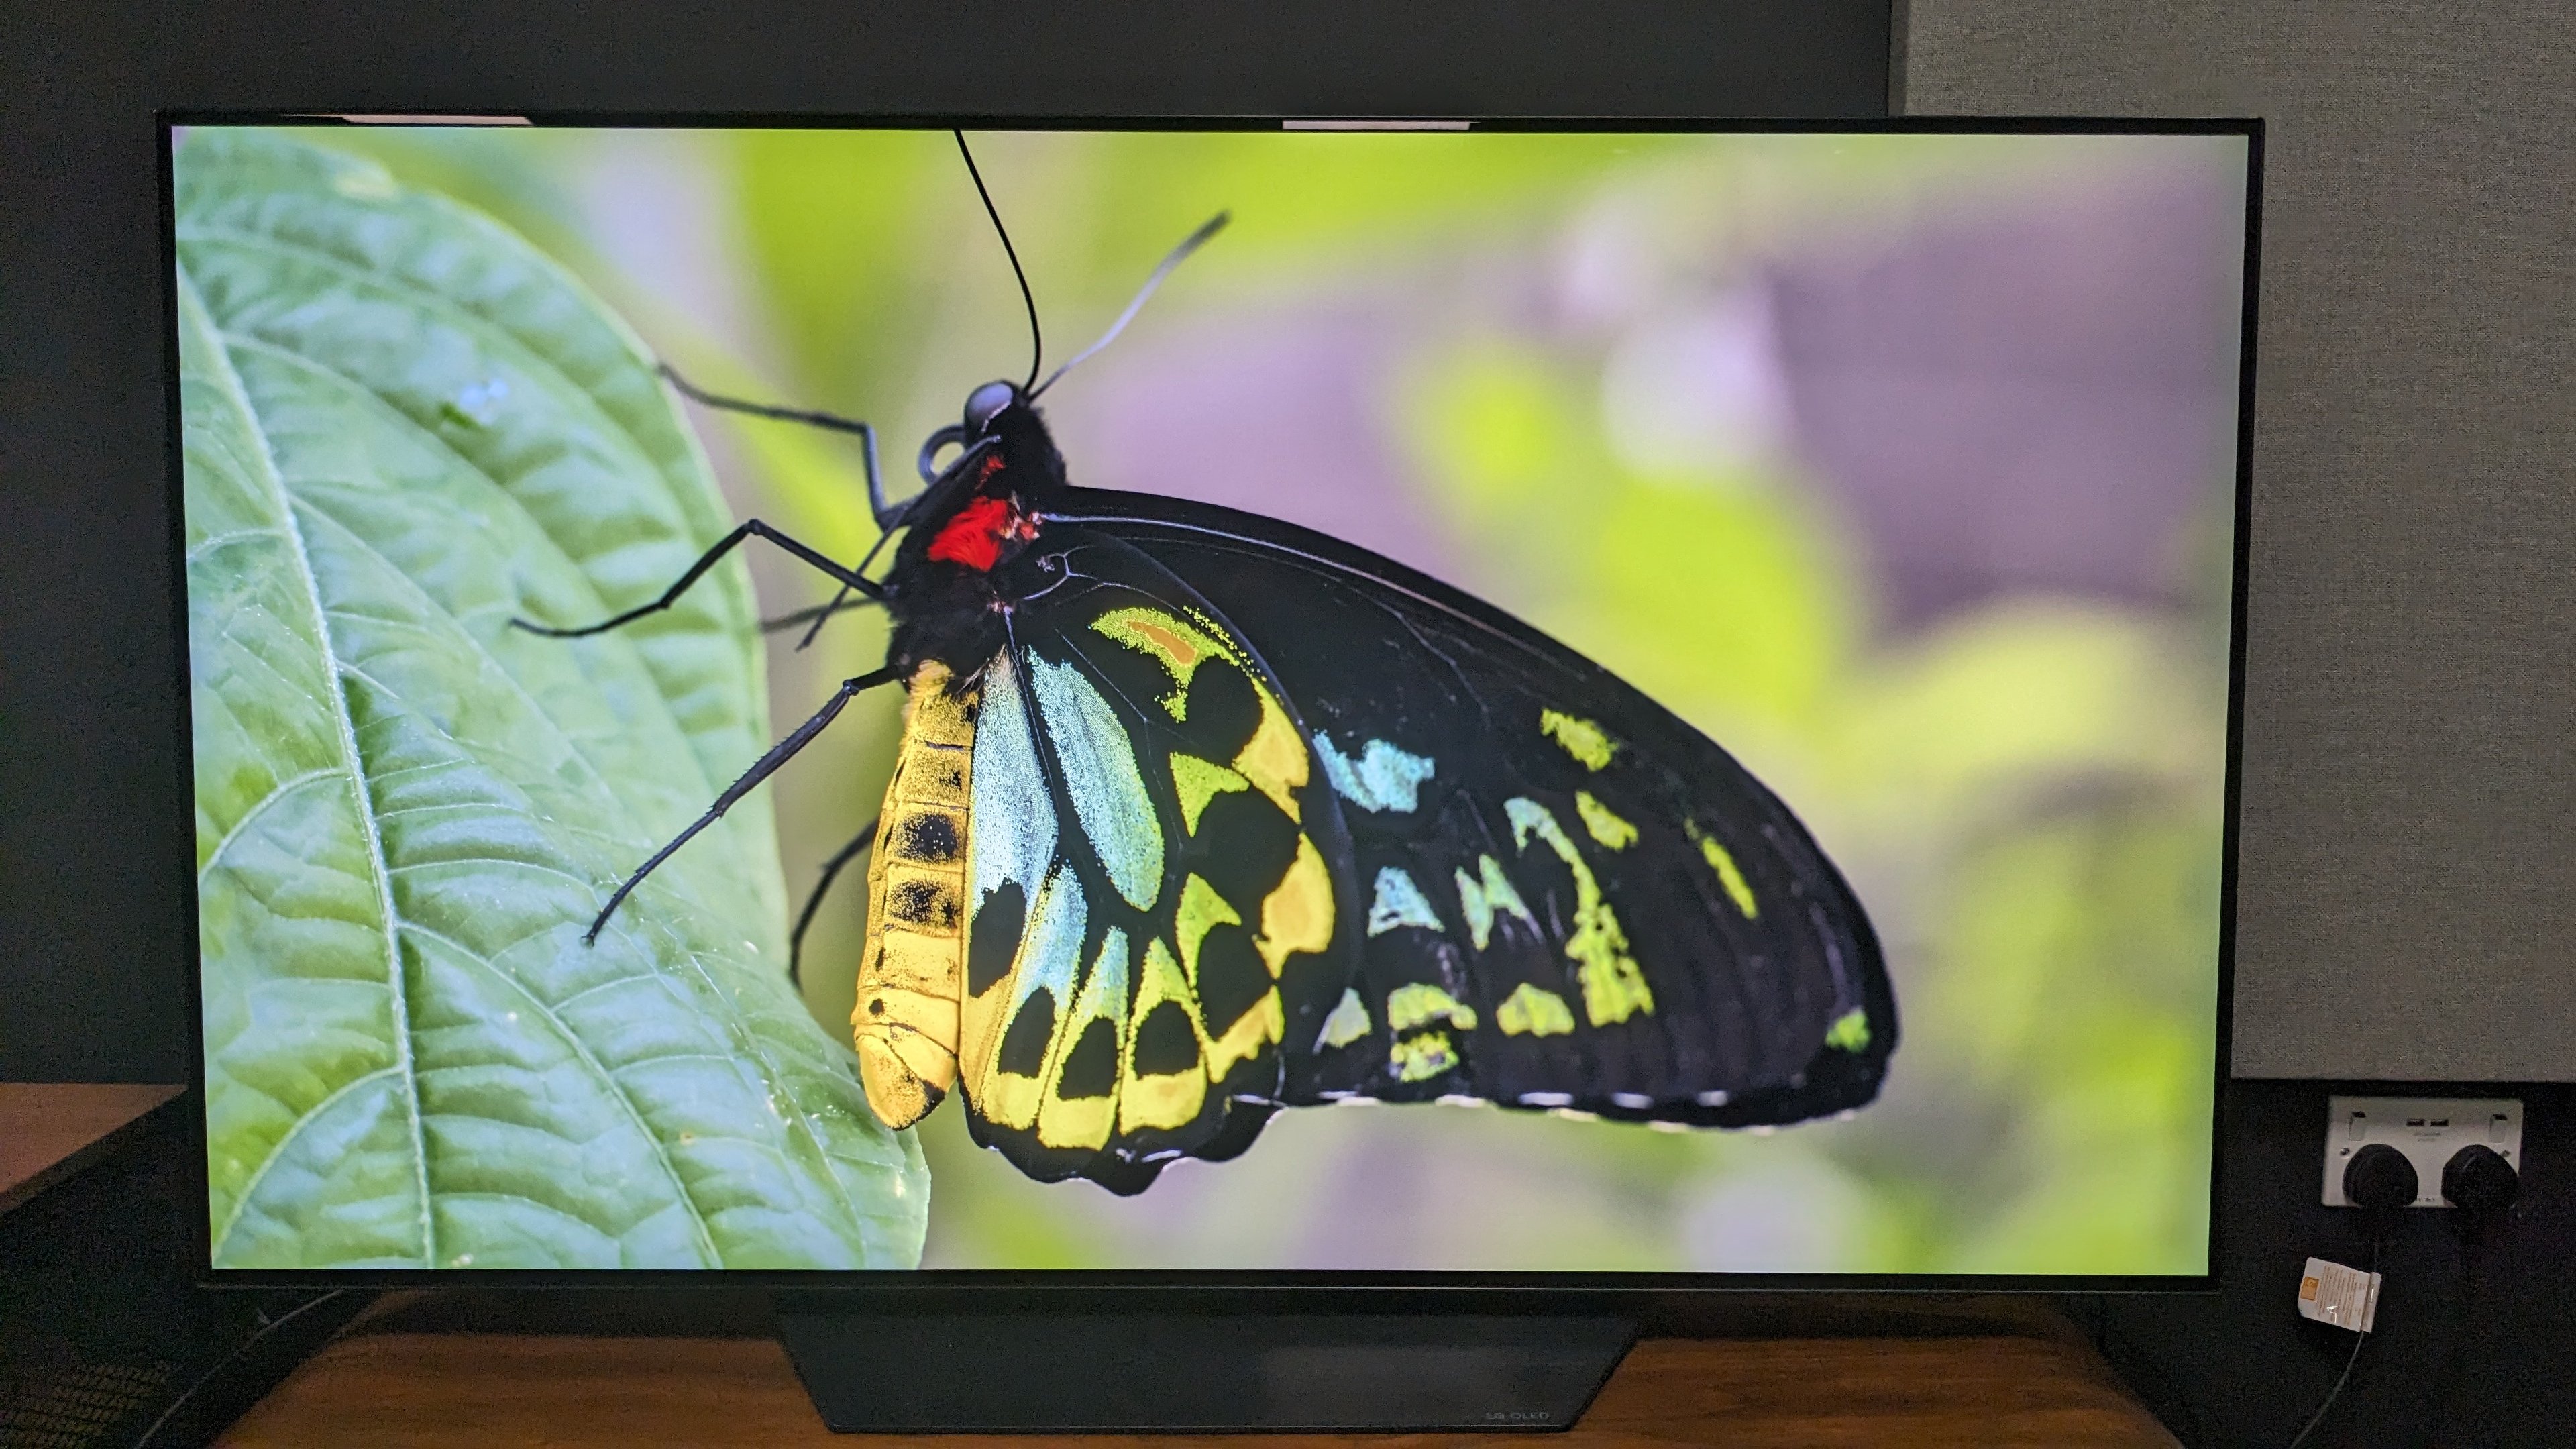 El televisor LG B3 muestra una mariposa verde en la pantalla sentada sobre una hoja.